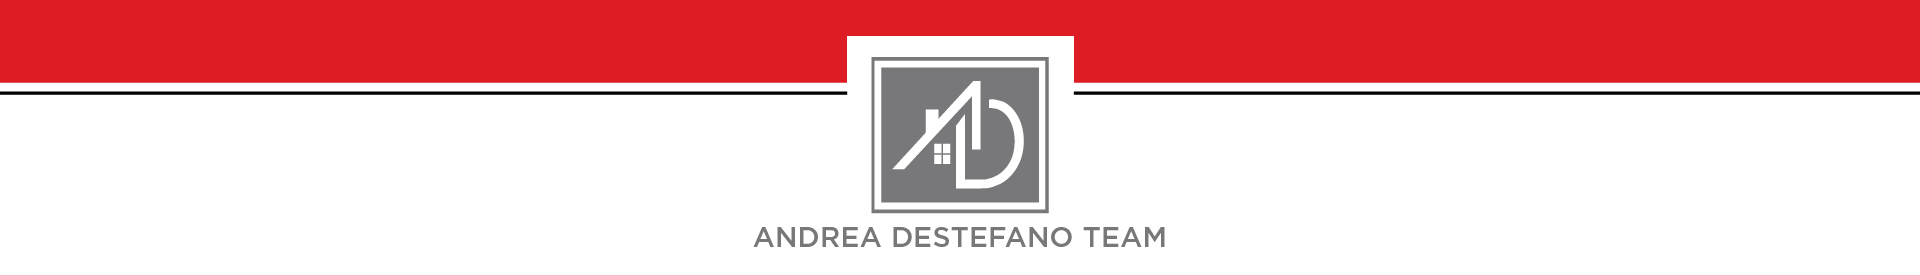 Destefano-Web-Header-Adj-Ctr